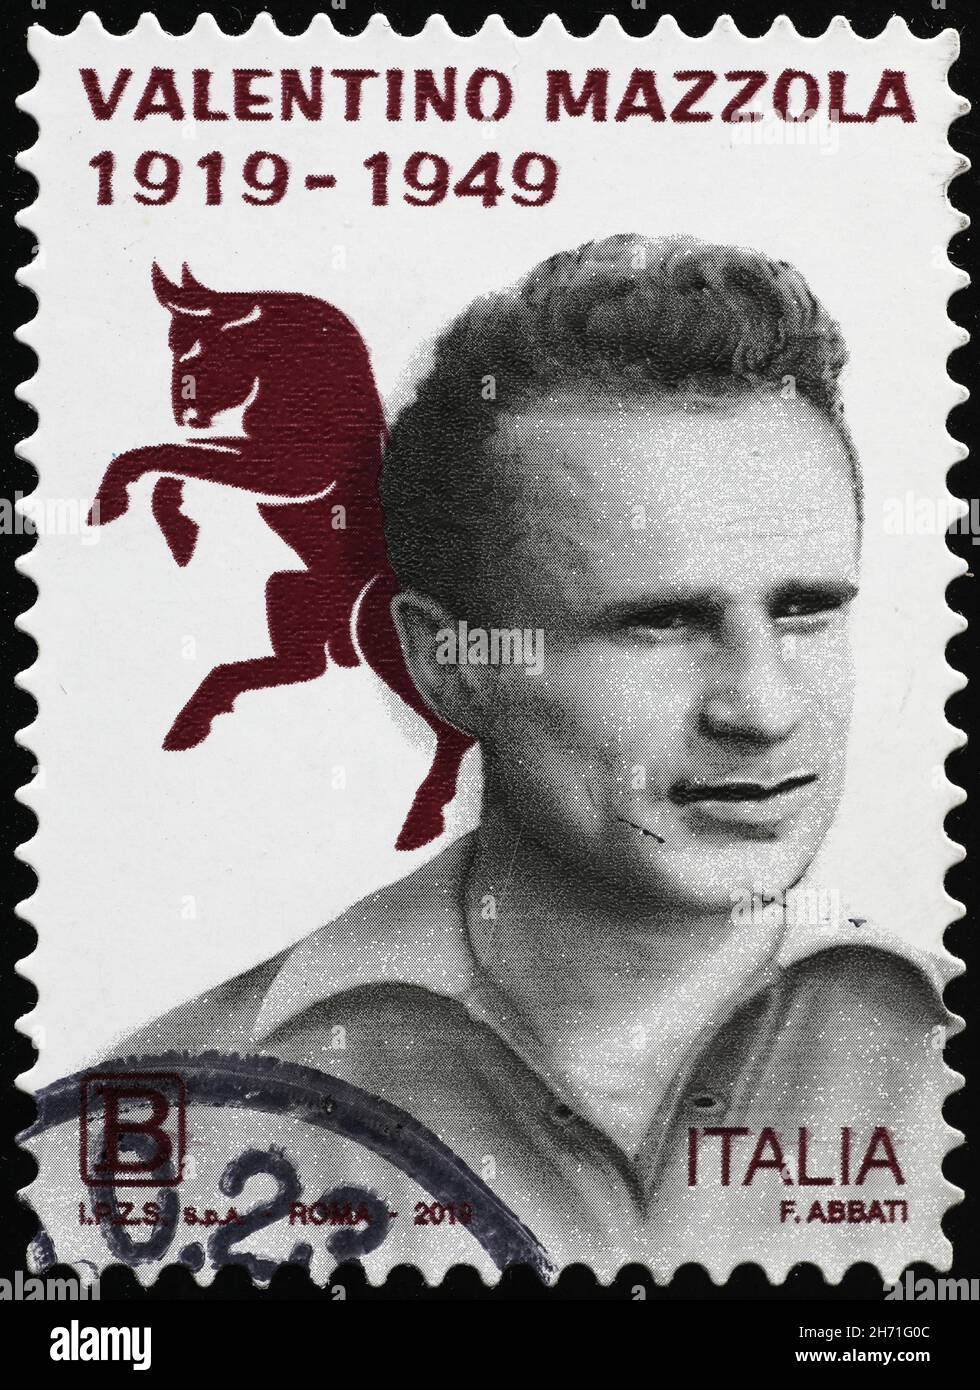 Footballer Valentino Mazzola on italian postage stamp Stock Photo